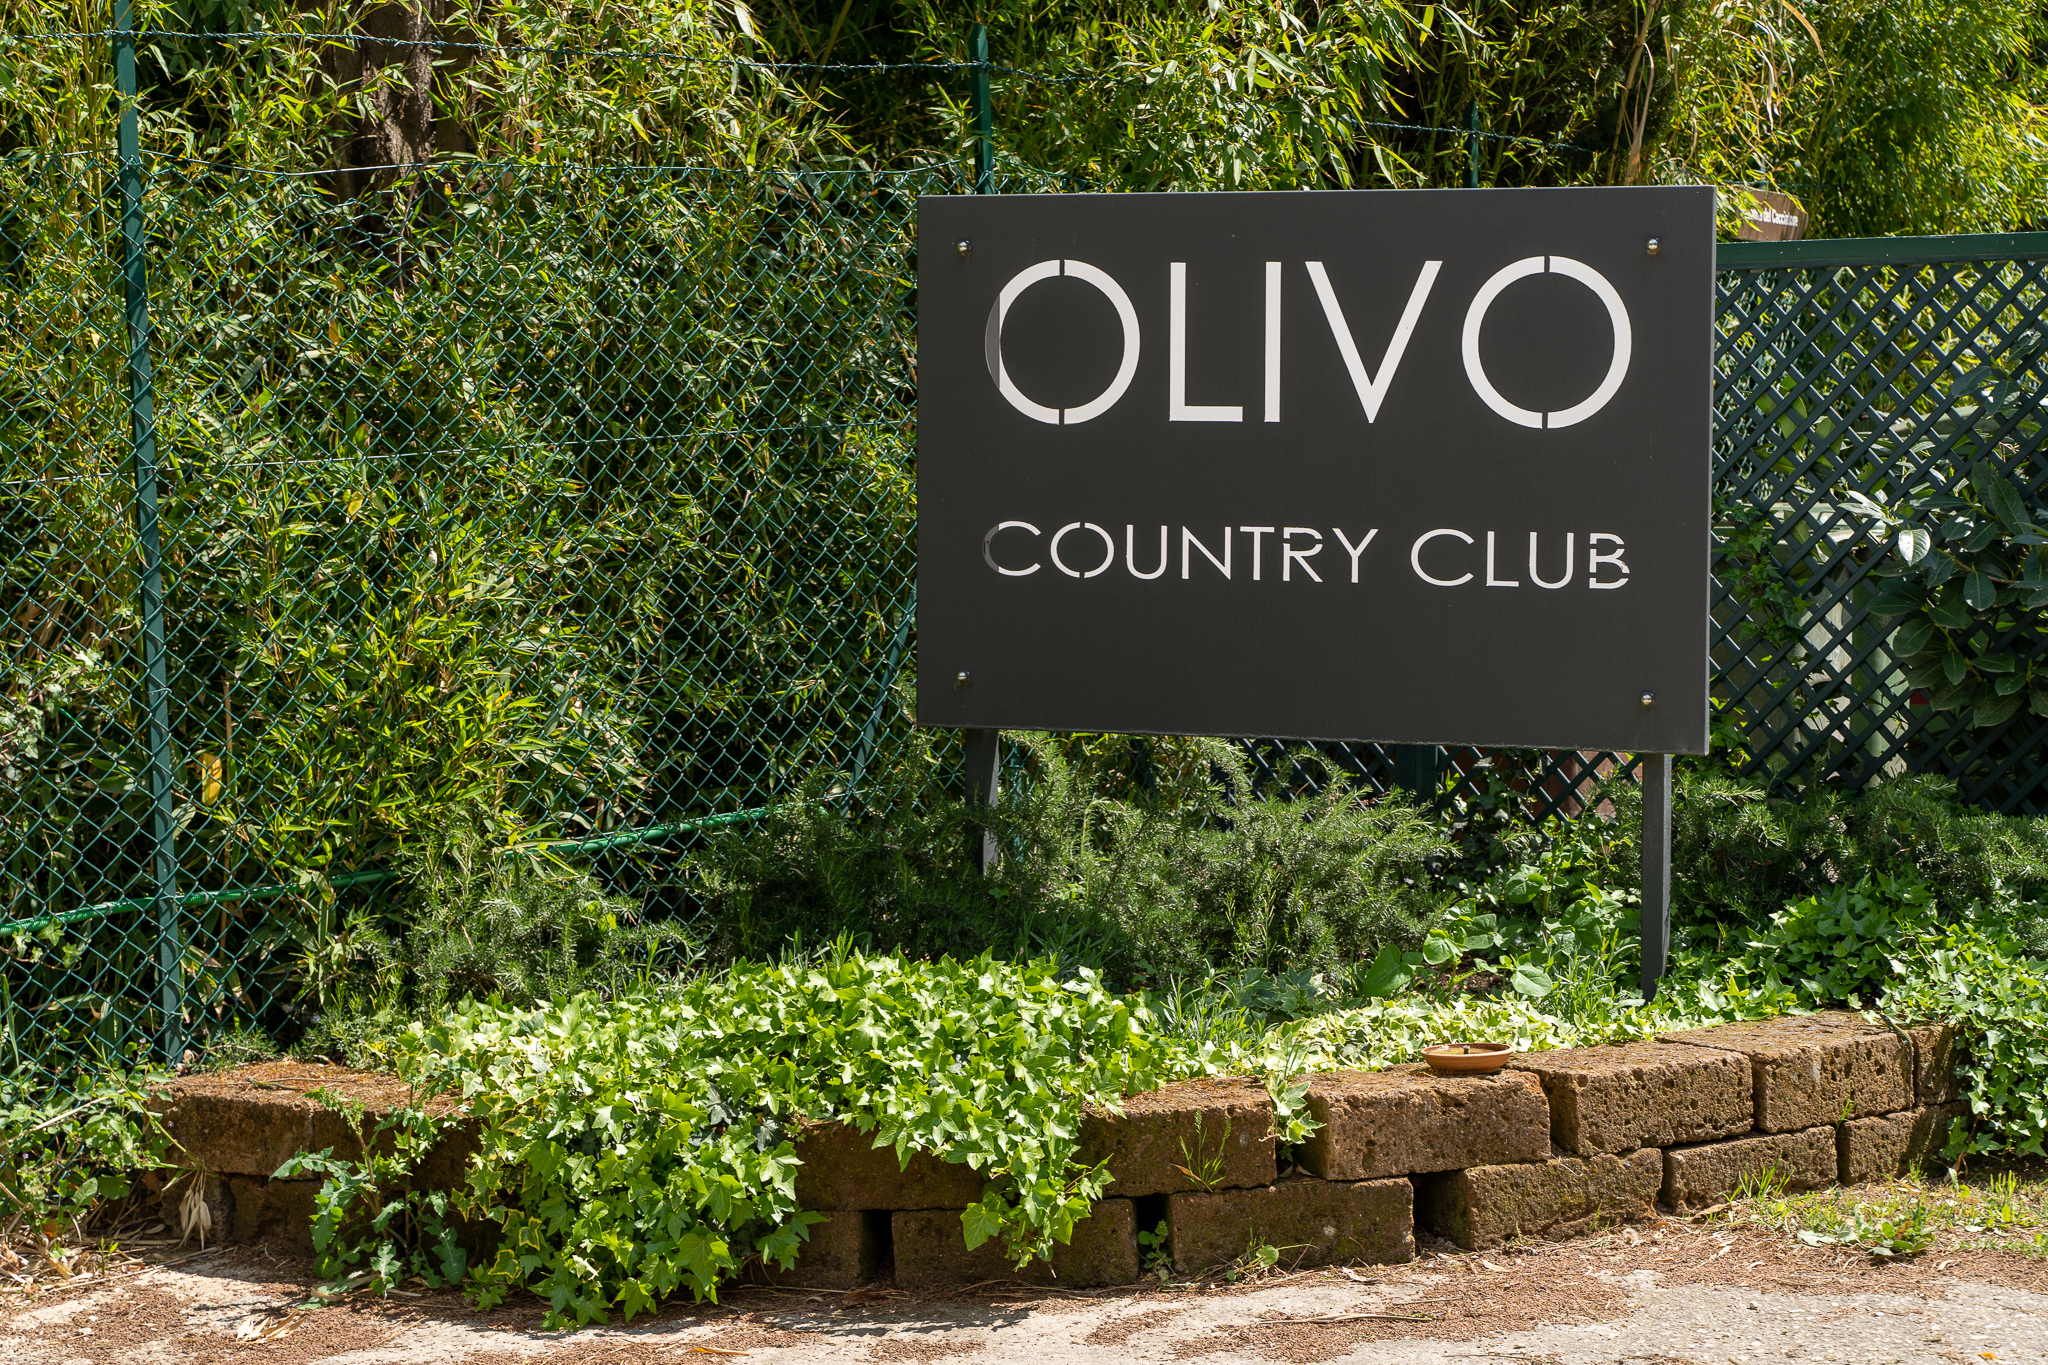 Olivo Country Club Camere e Foto Notturne 26 Aprile 2022 edit 05719